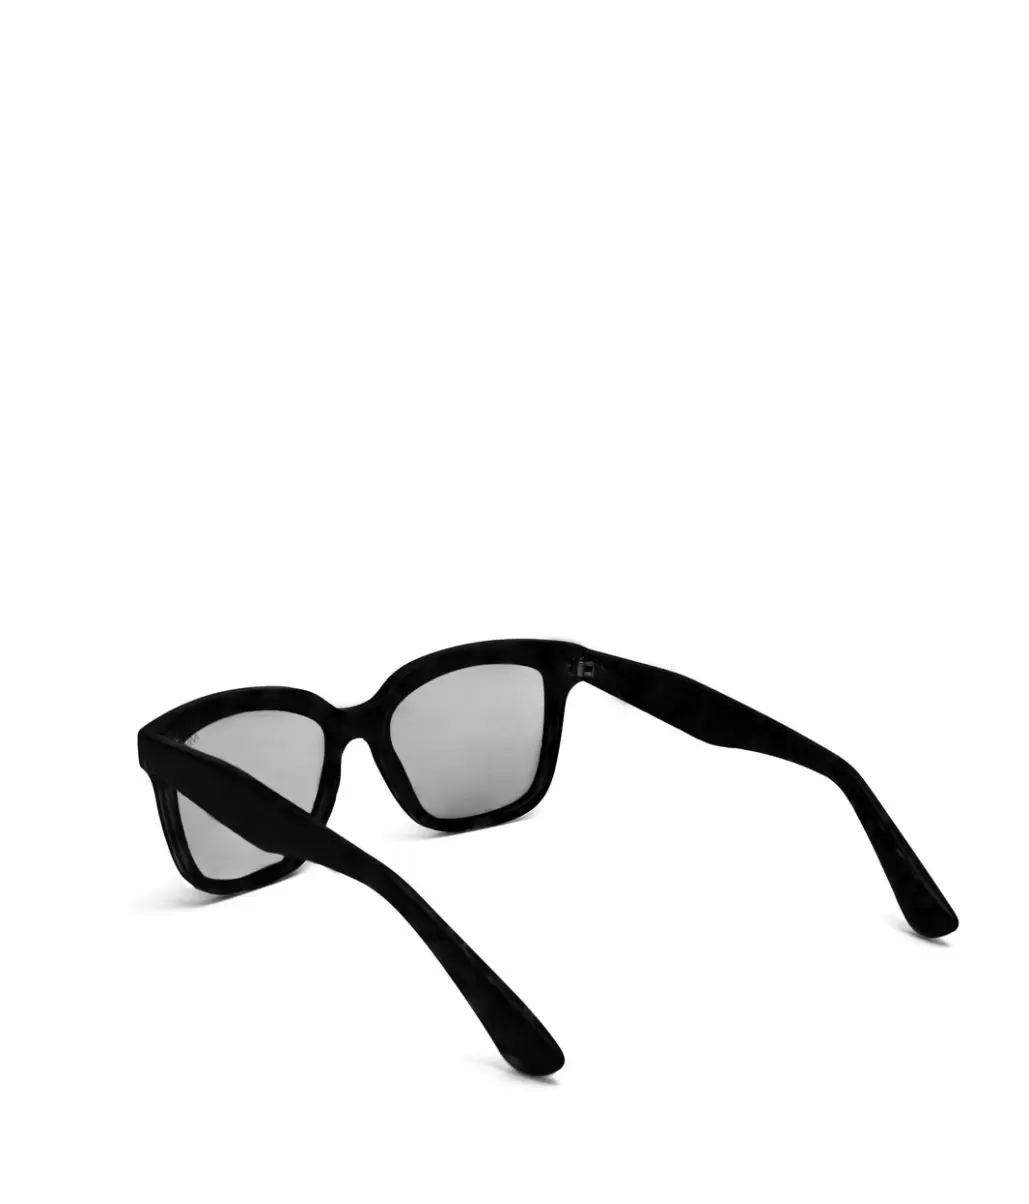 Matt & Nat Blkblk Sunglasses Women Value Vivie Wayfarer Sunglasses - 3